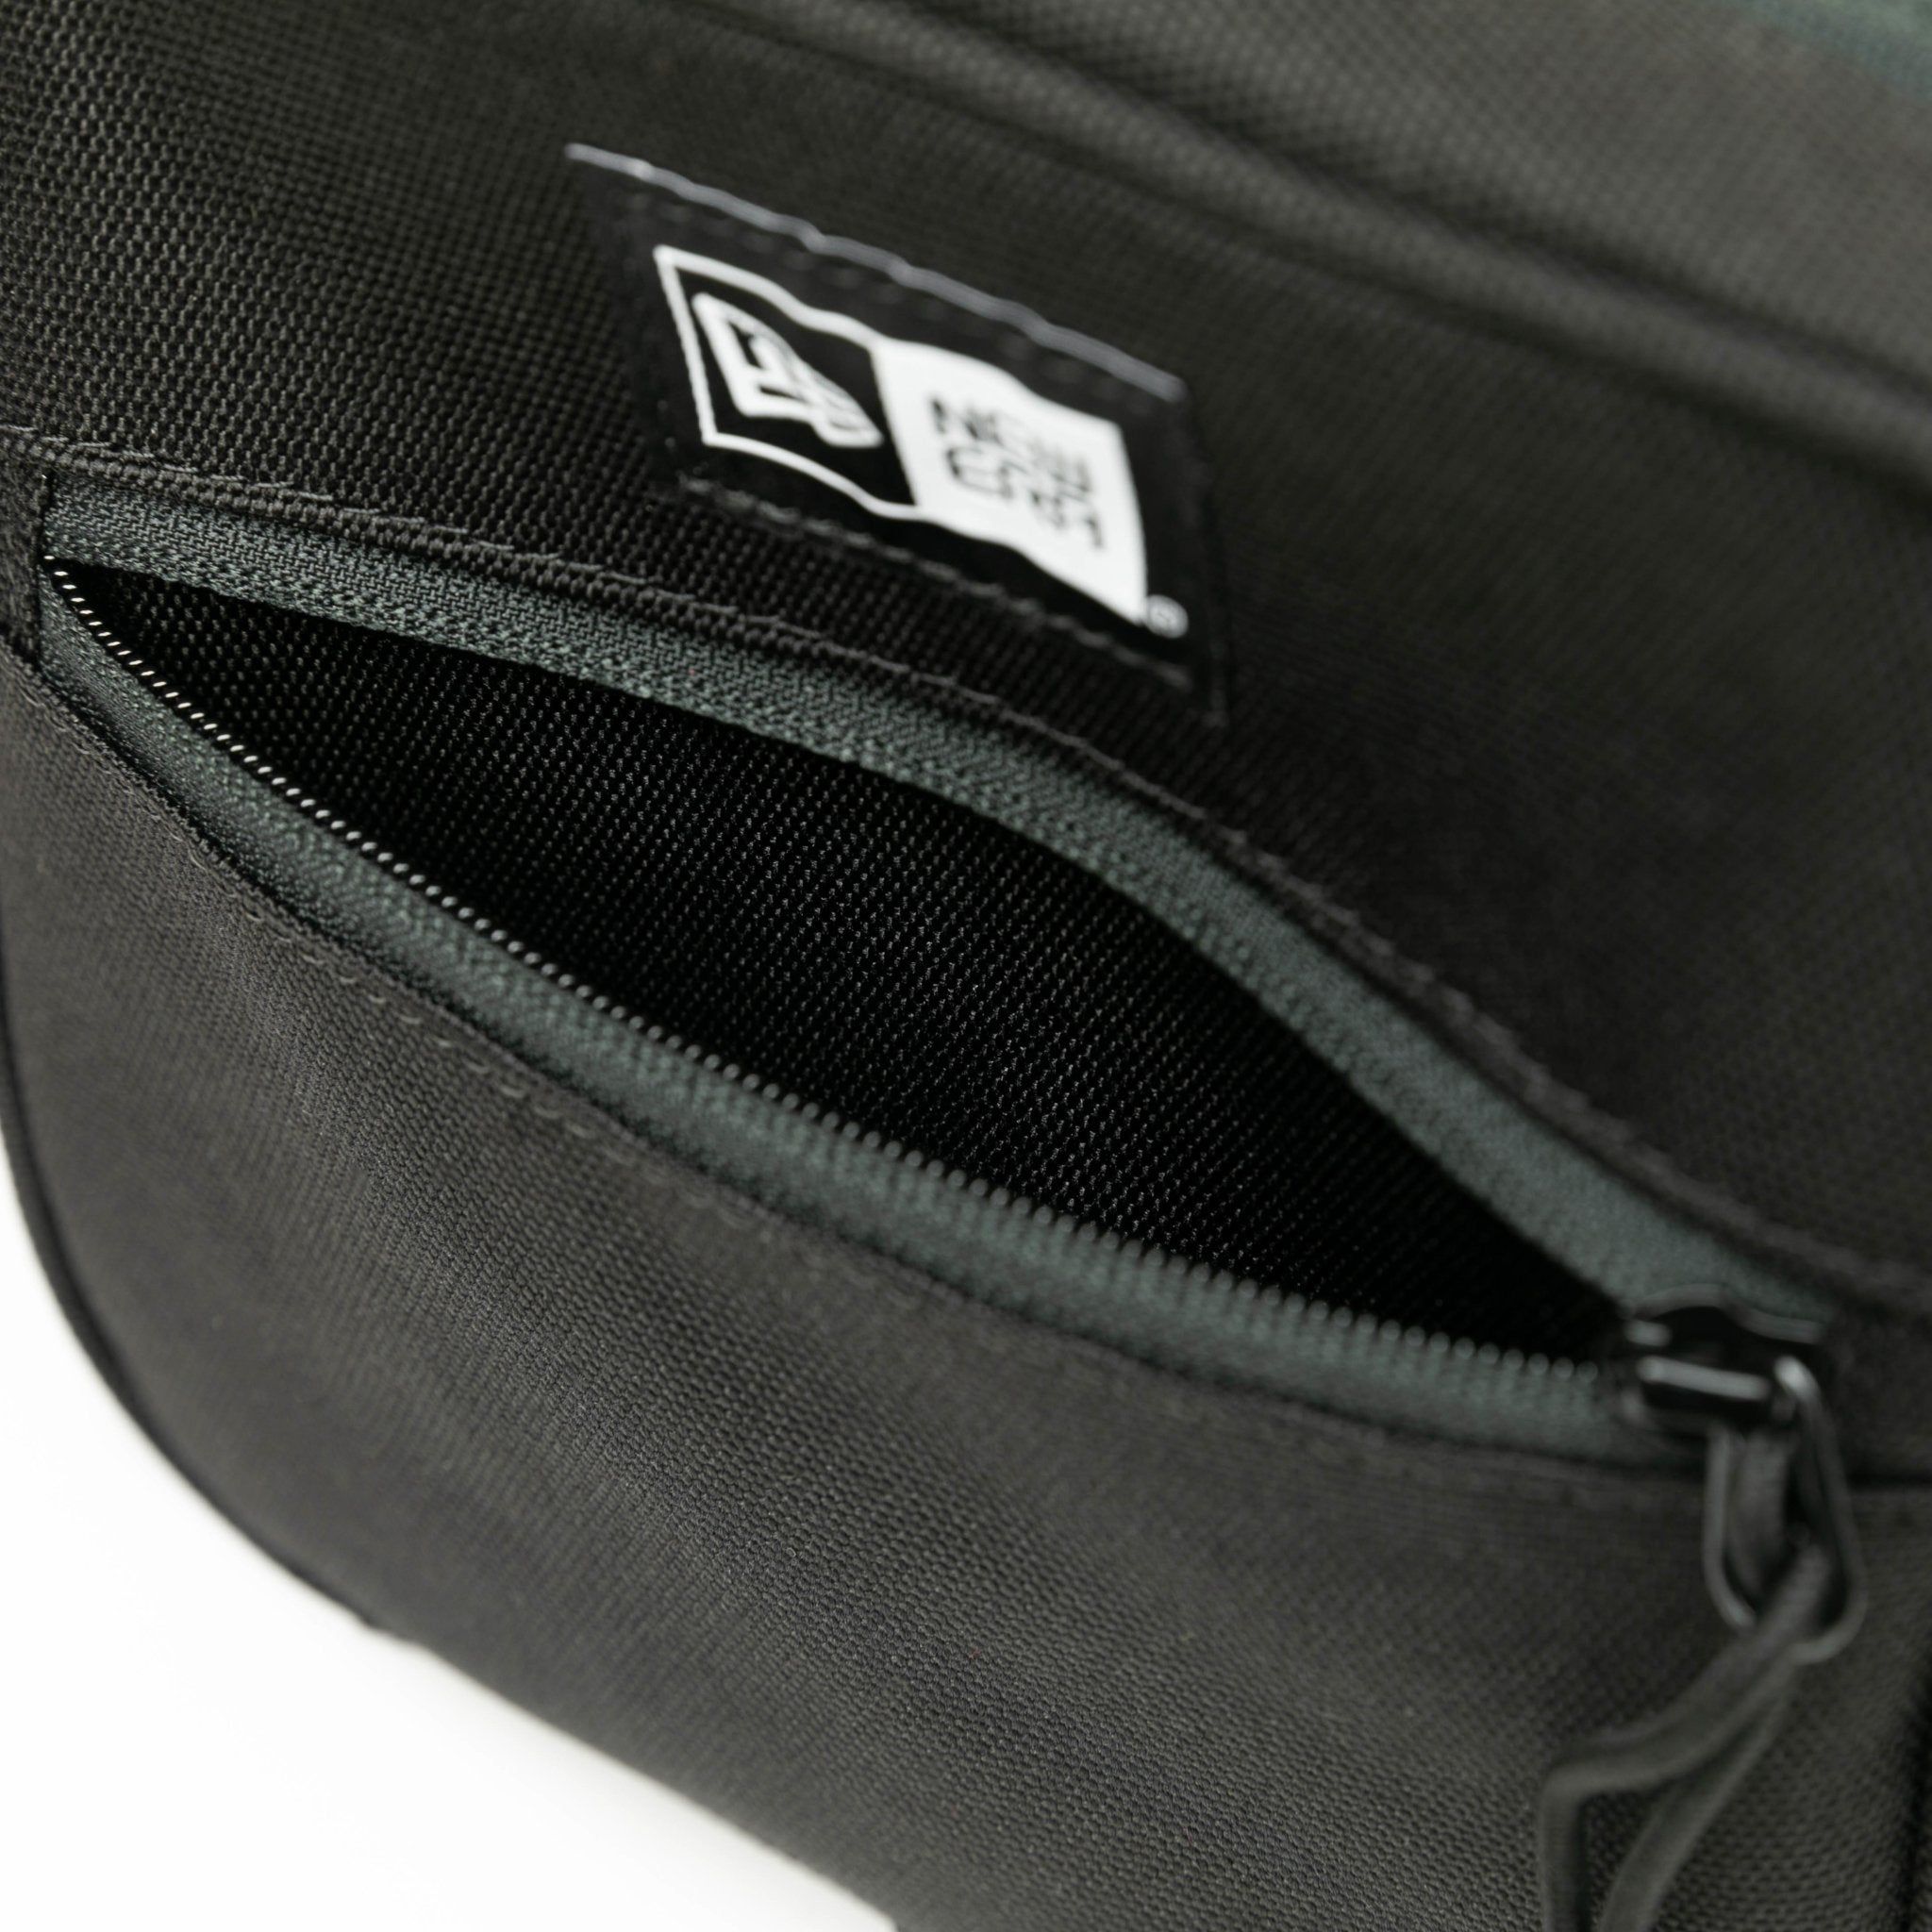  New Era Square 1.5L Shoulder Bag - Black 